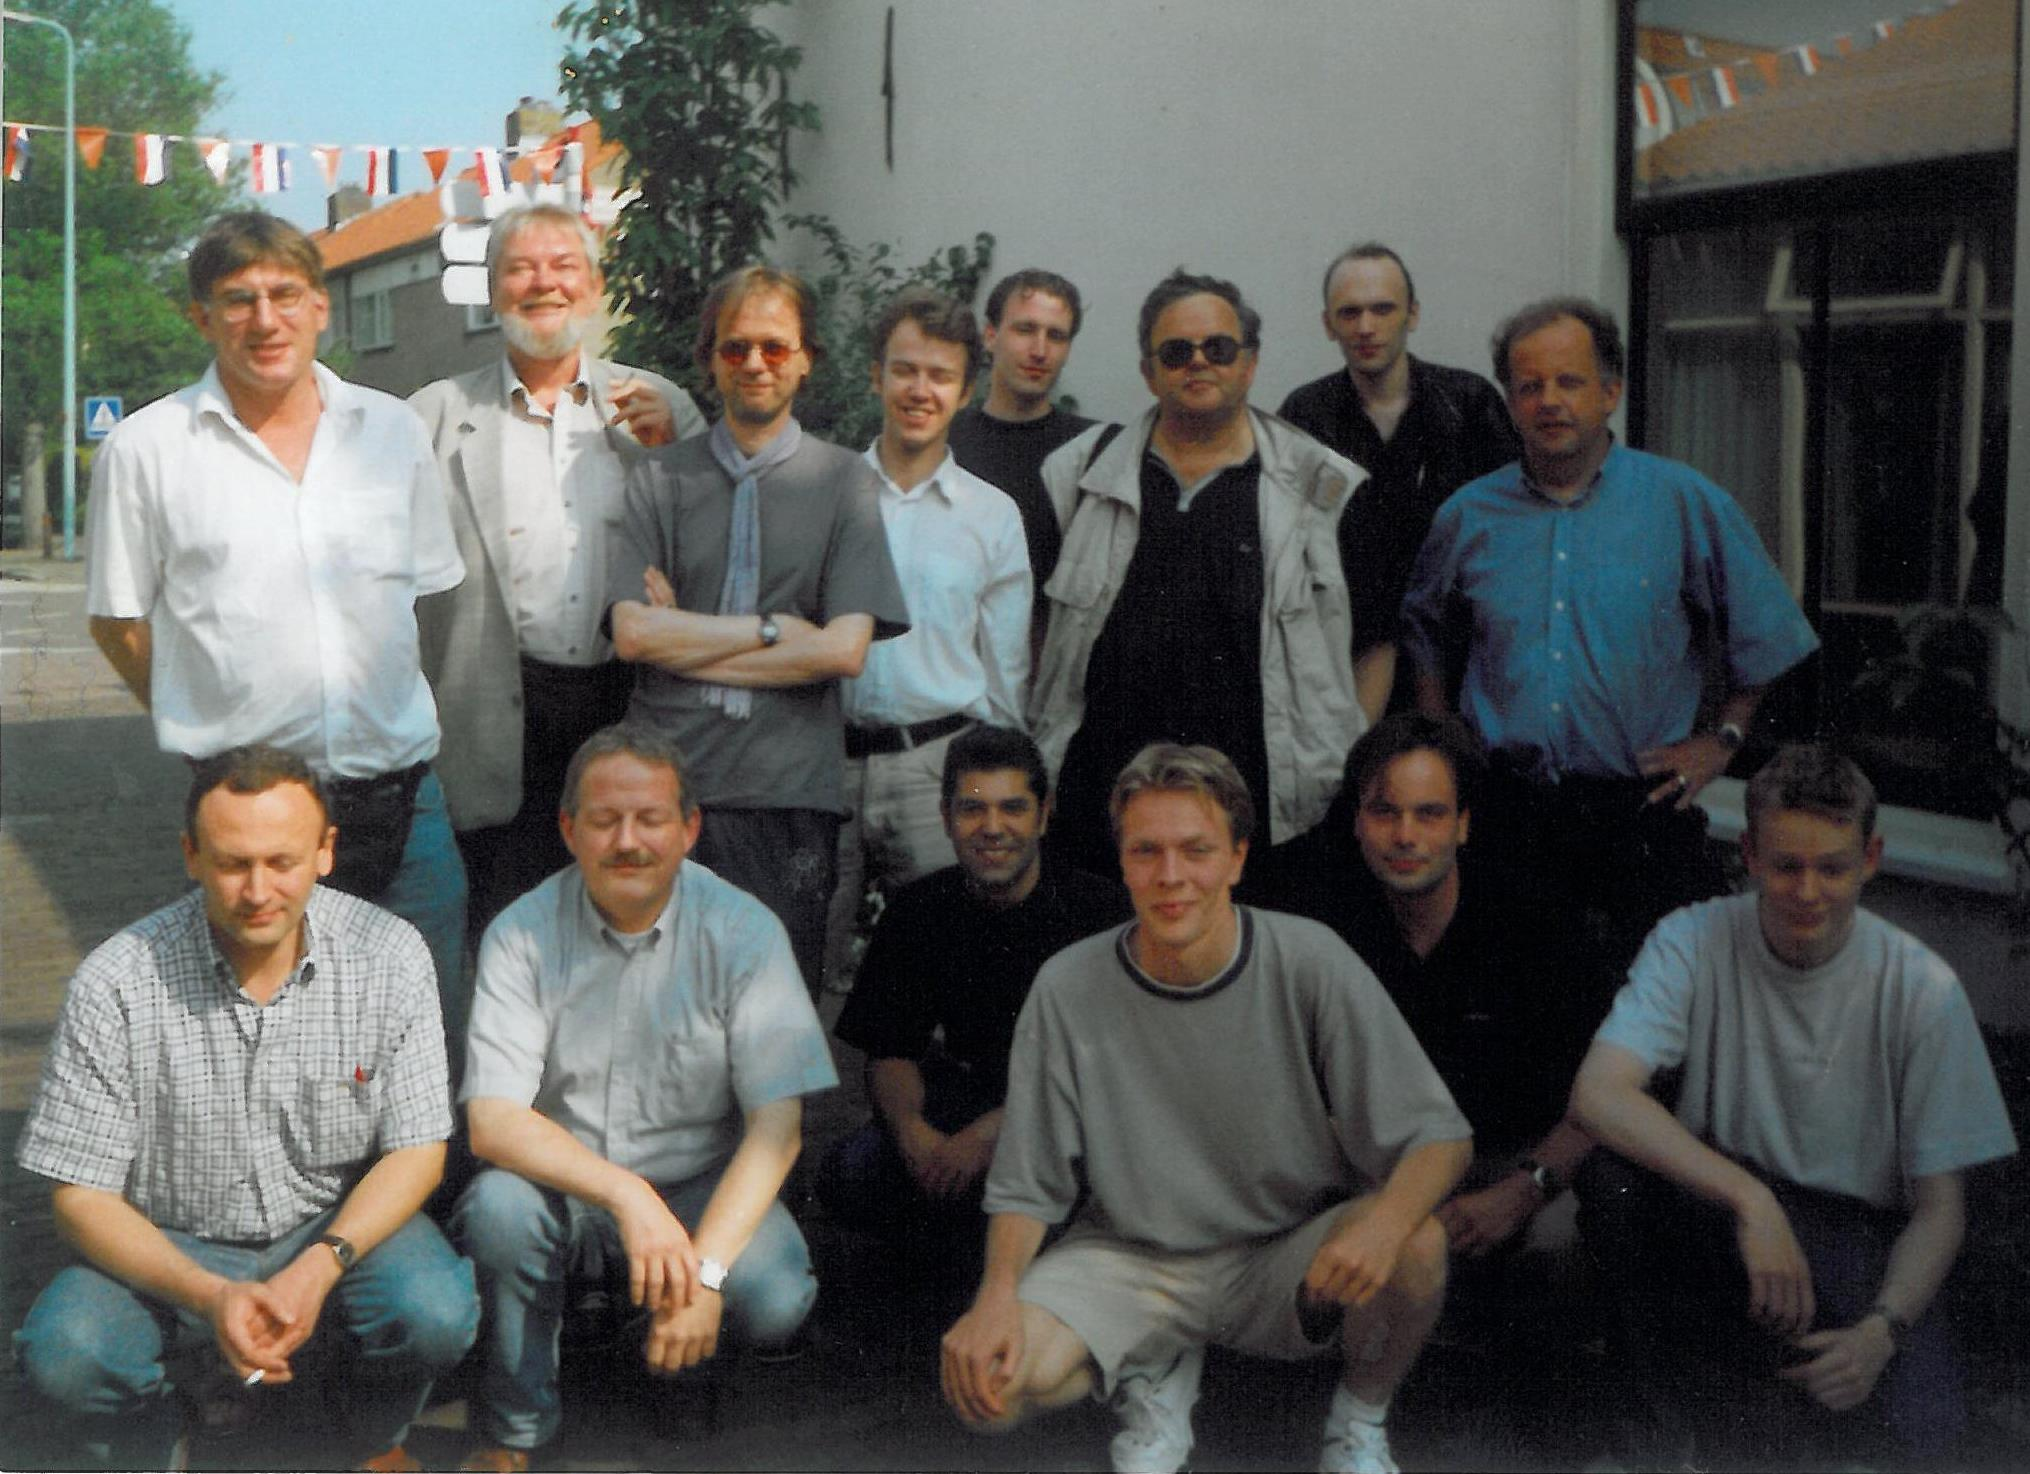 Teamfoto na promotie in seizoen 1999-2000 - Vlnr staand Karel van Delft (teamleider), Hartoch, Kuiper (teamleider), Rowson,